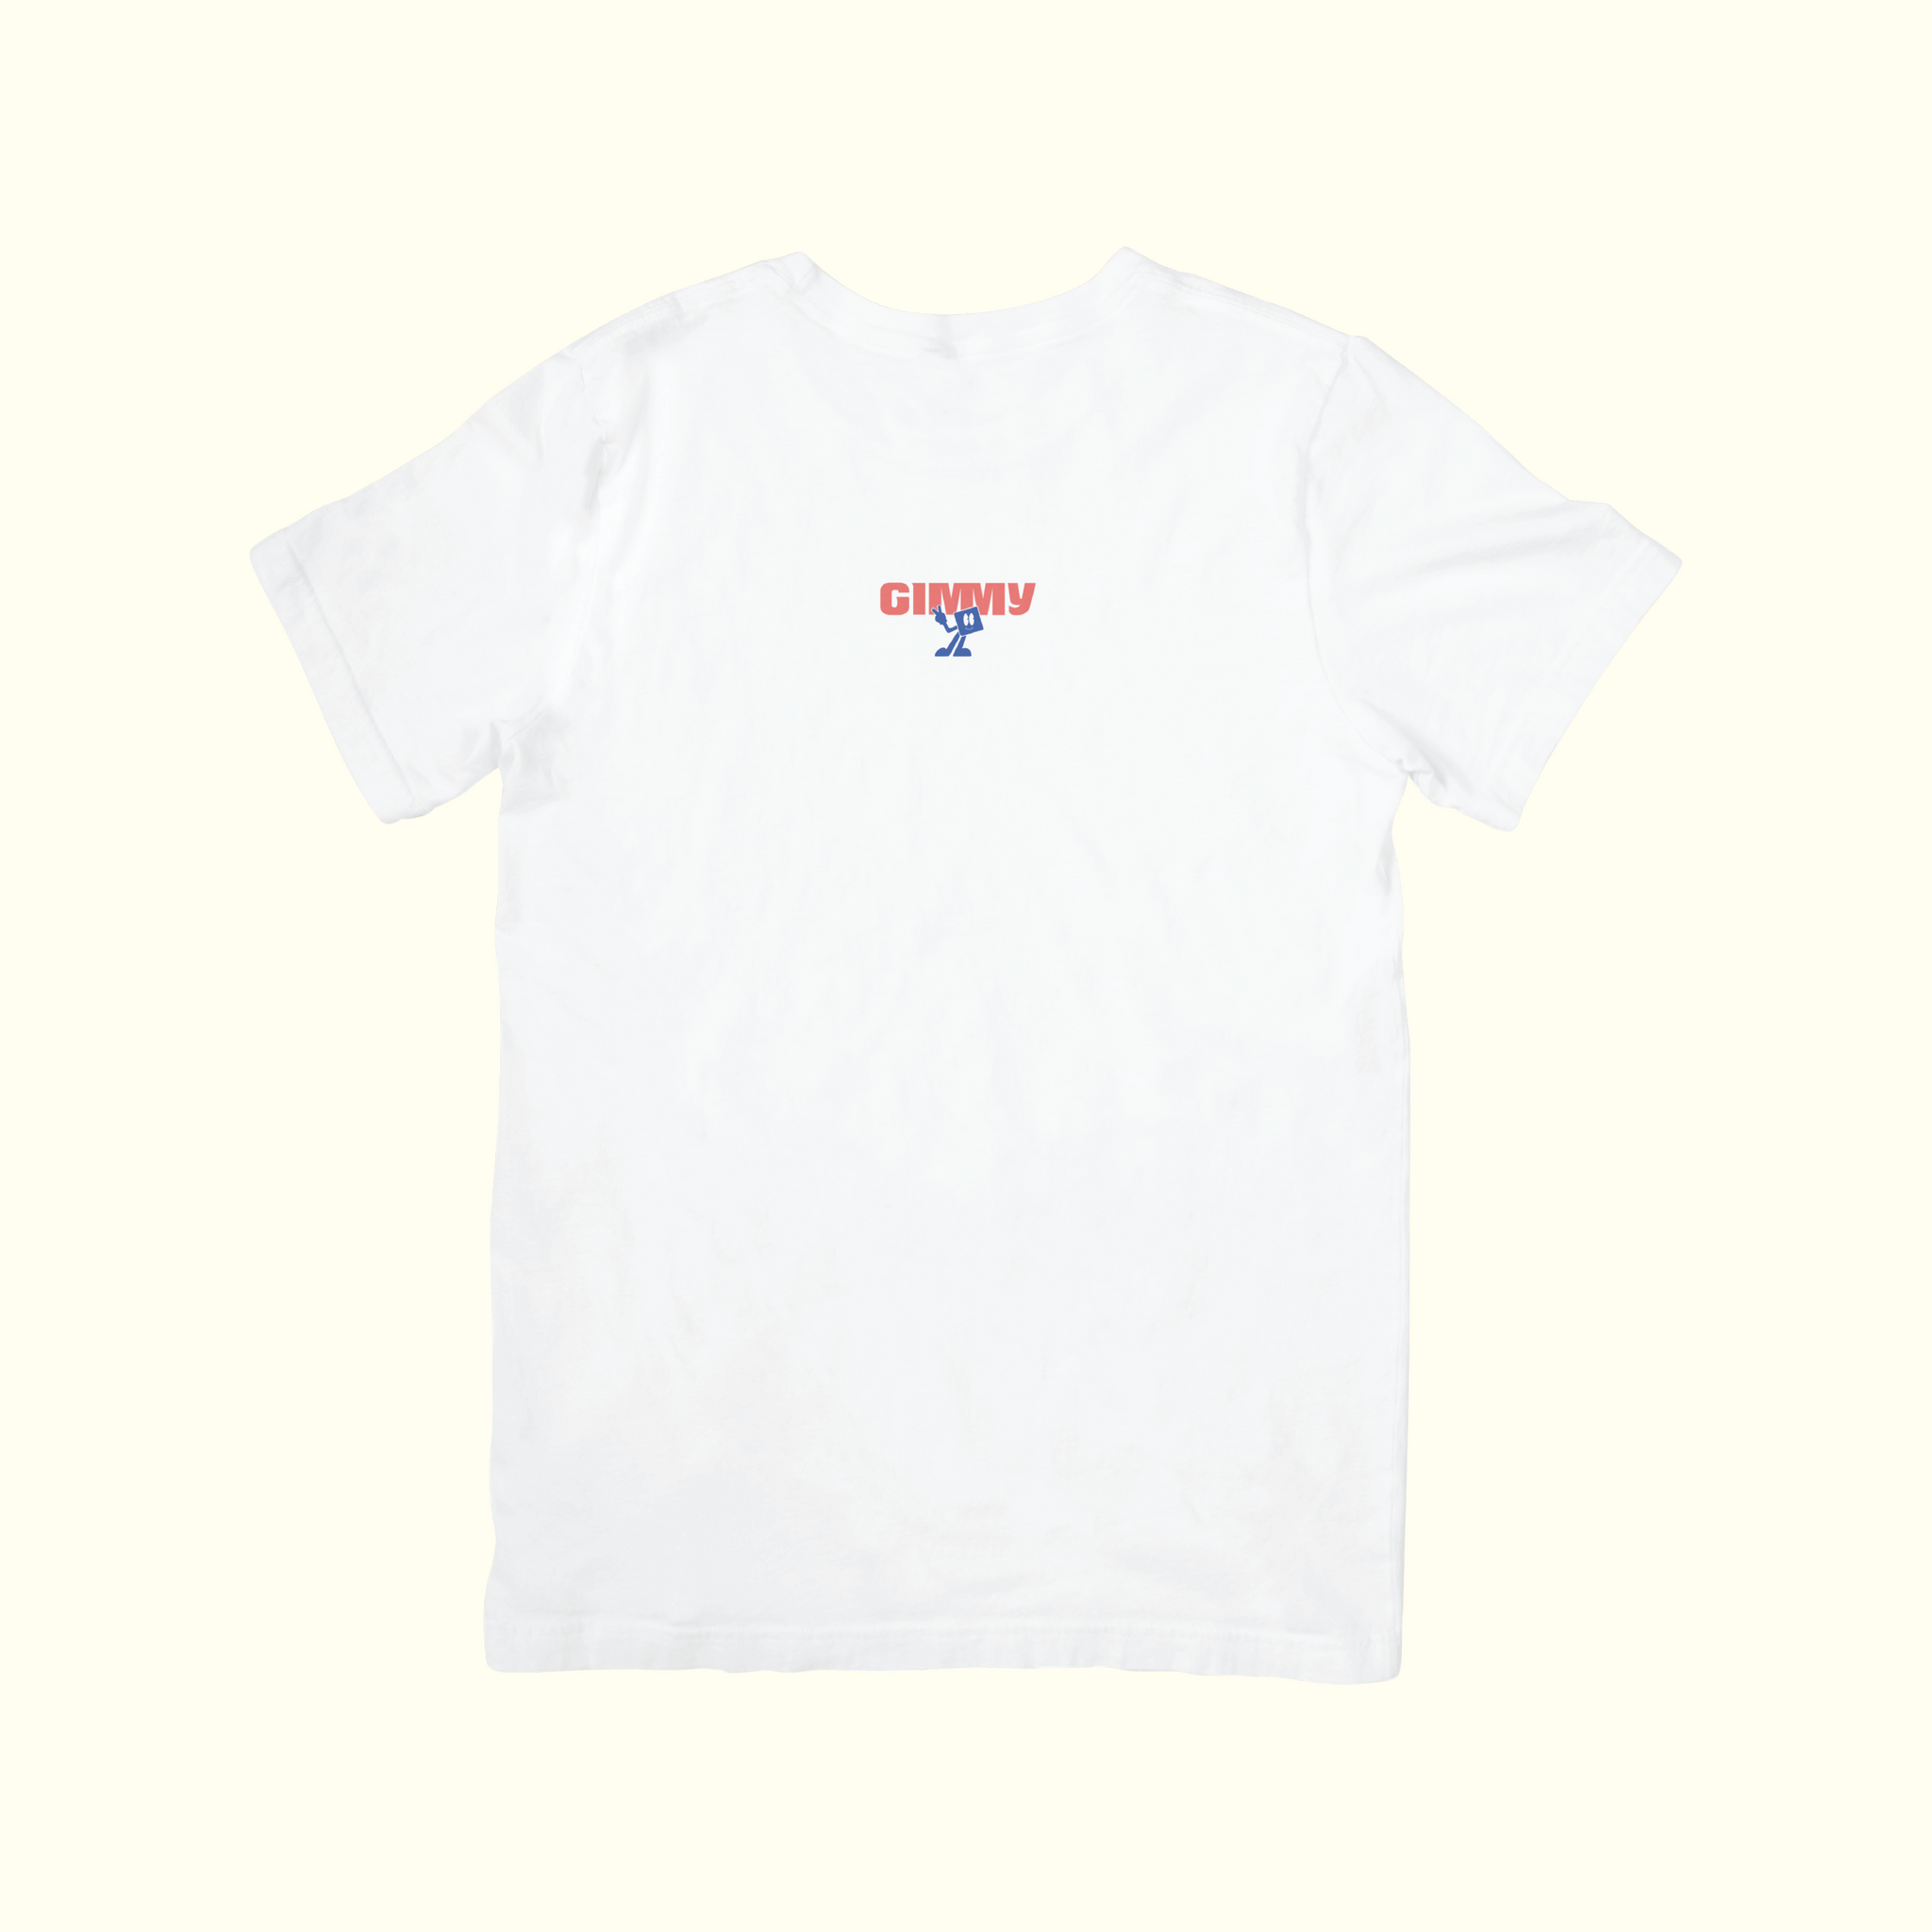 GIMMY t-shirt - unisex